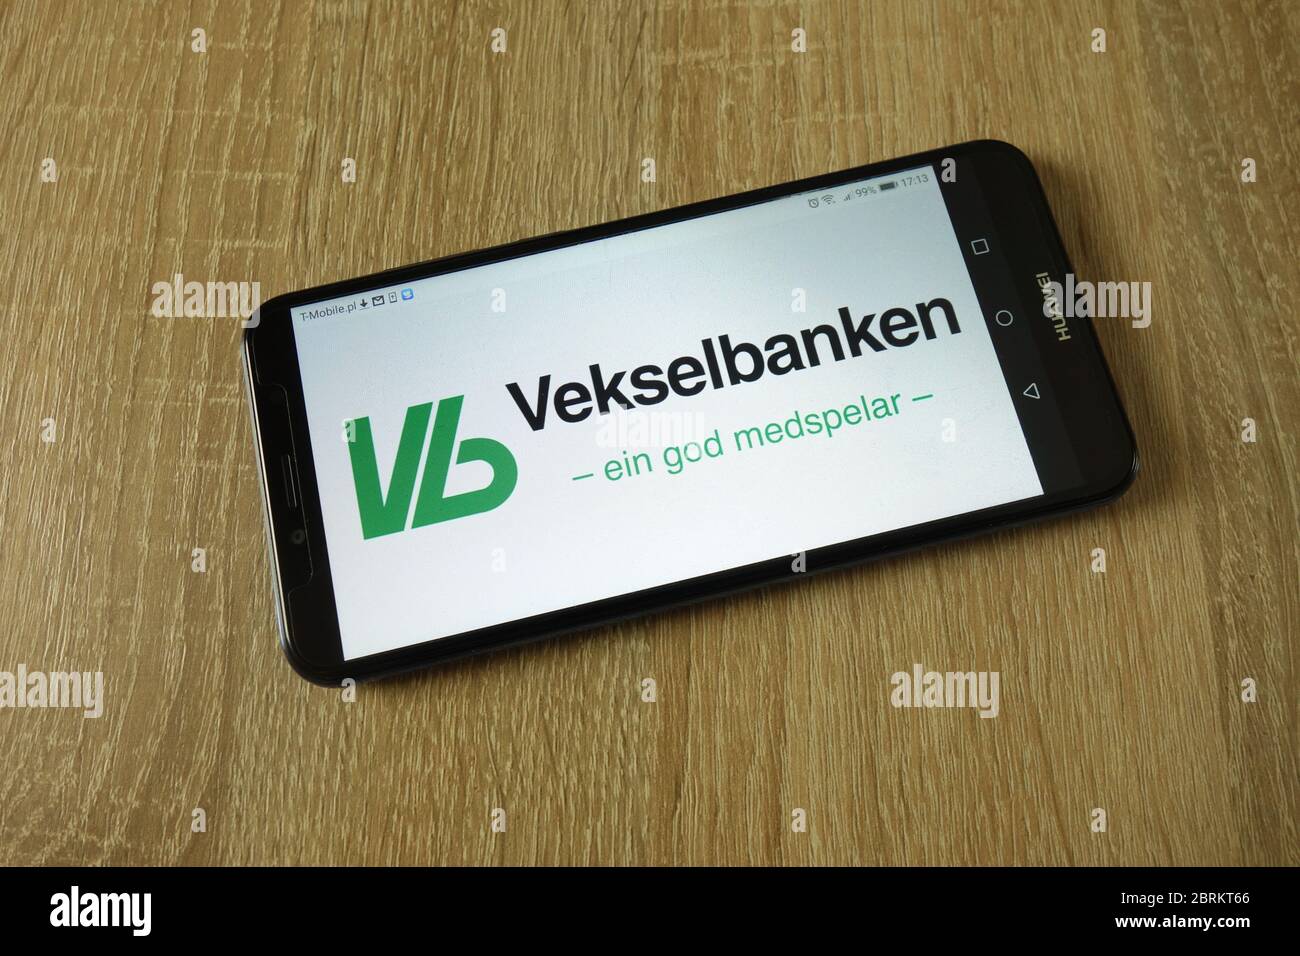 Vekselbanken logo displayed on smartphone Stock Photo